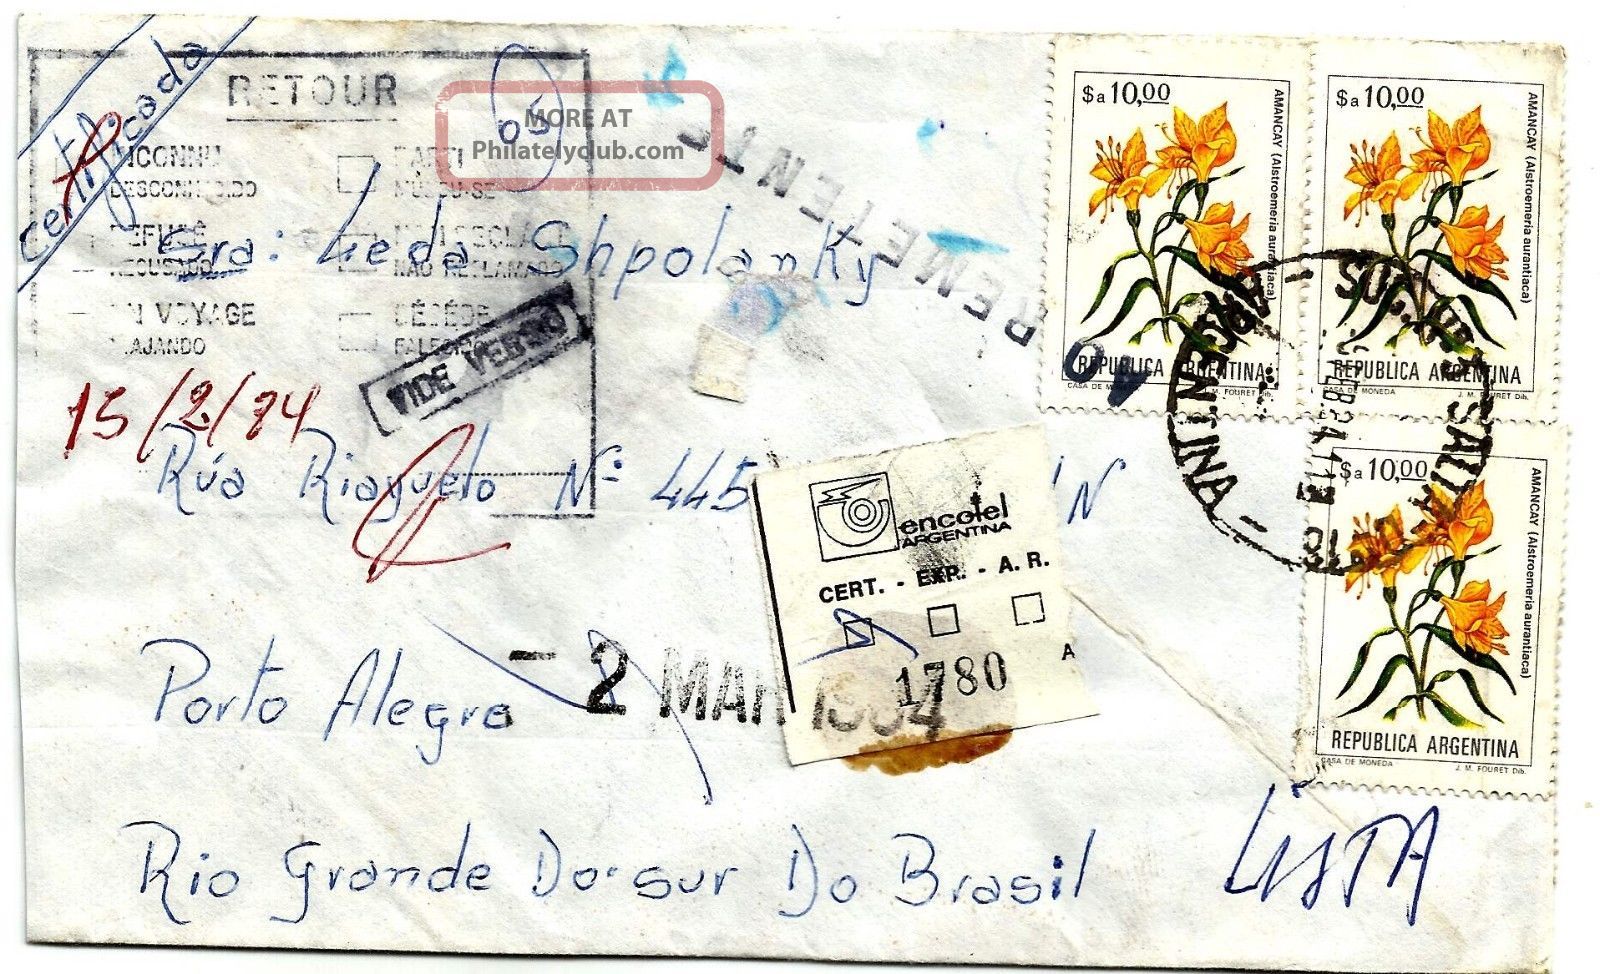 Salta February 5th1984 Registered Inflation - Brazil Postage Returned Sender Latin America photo